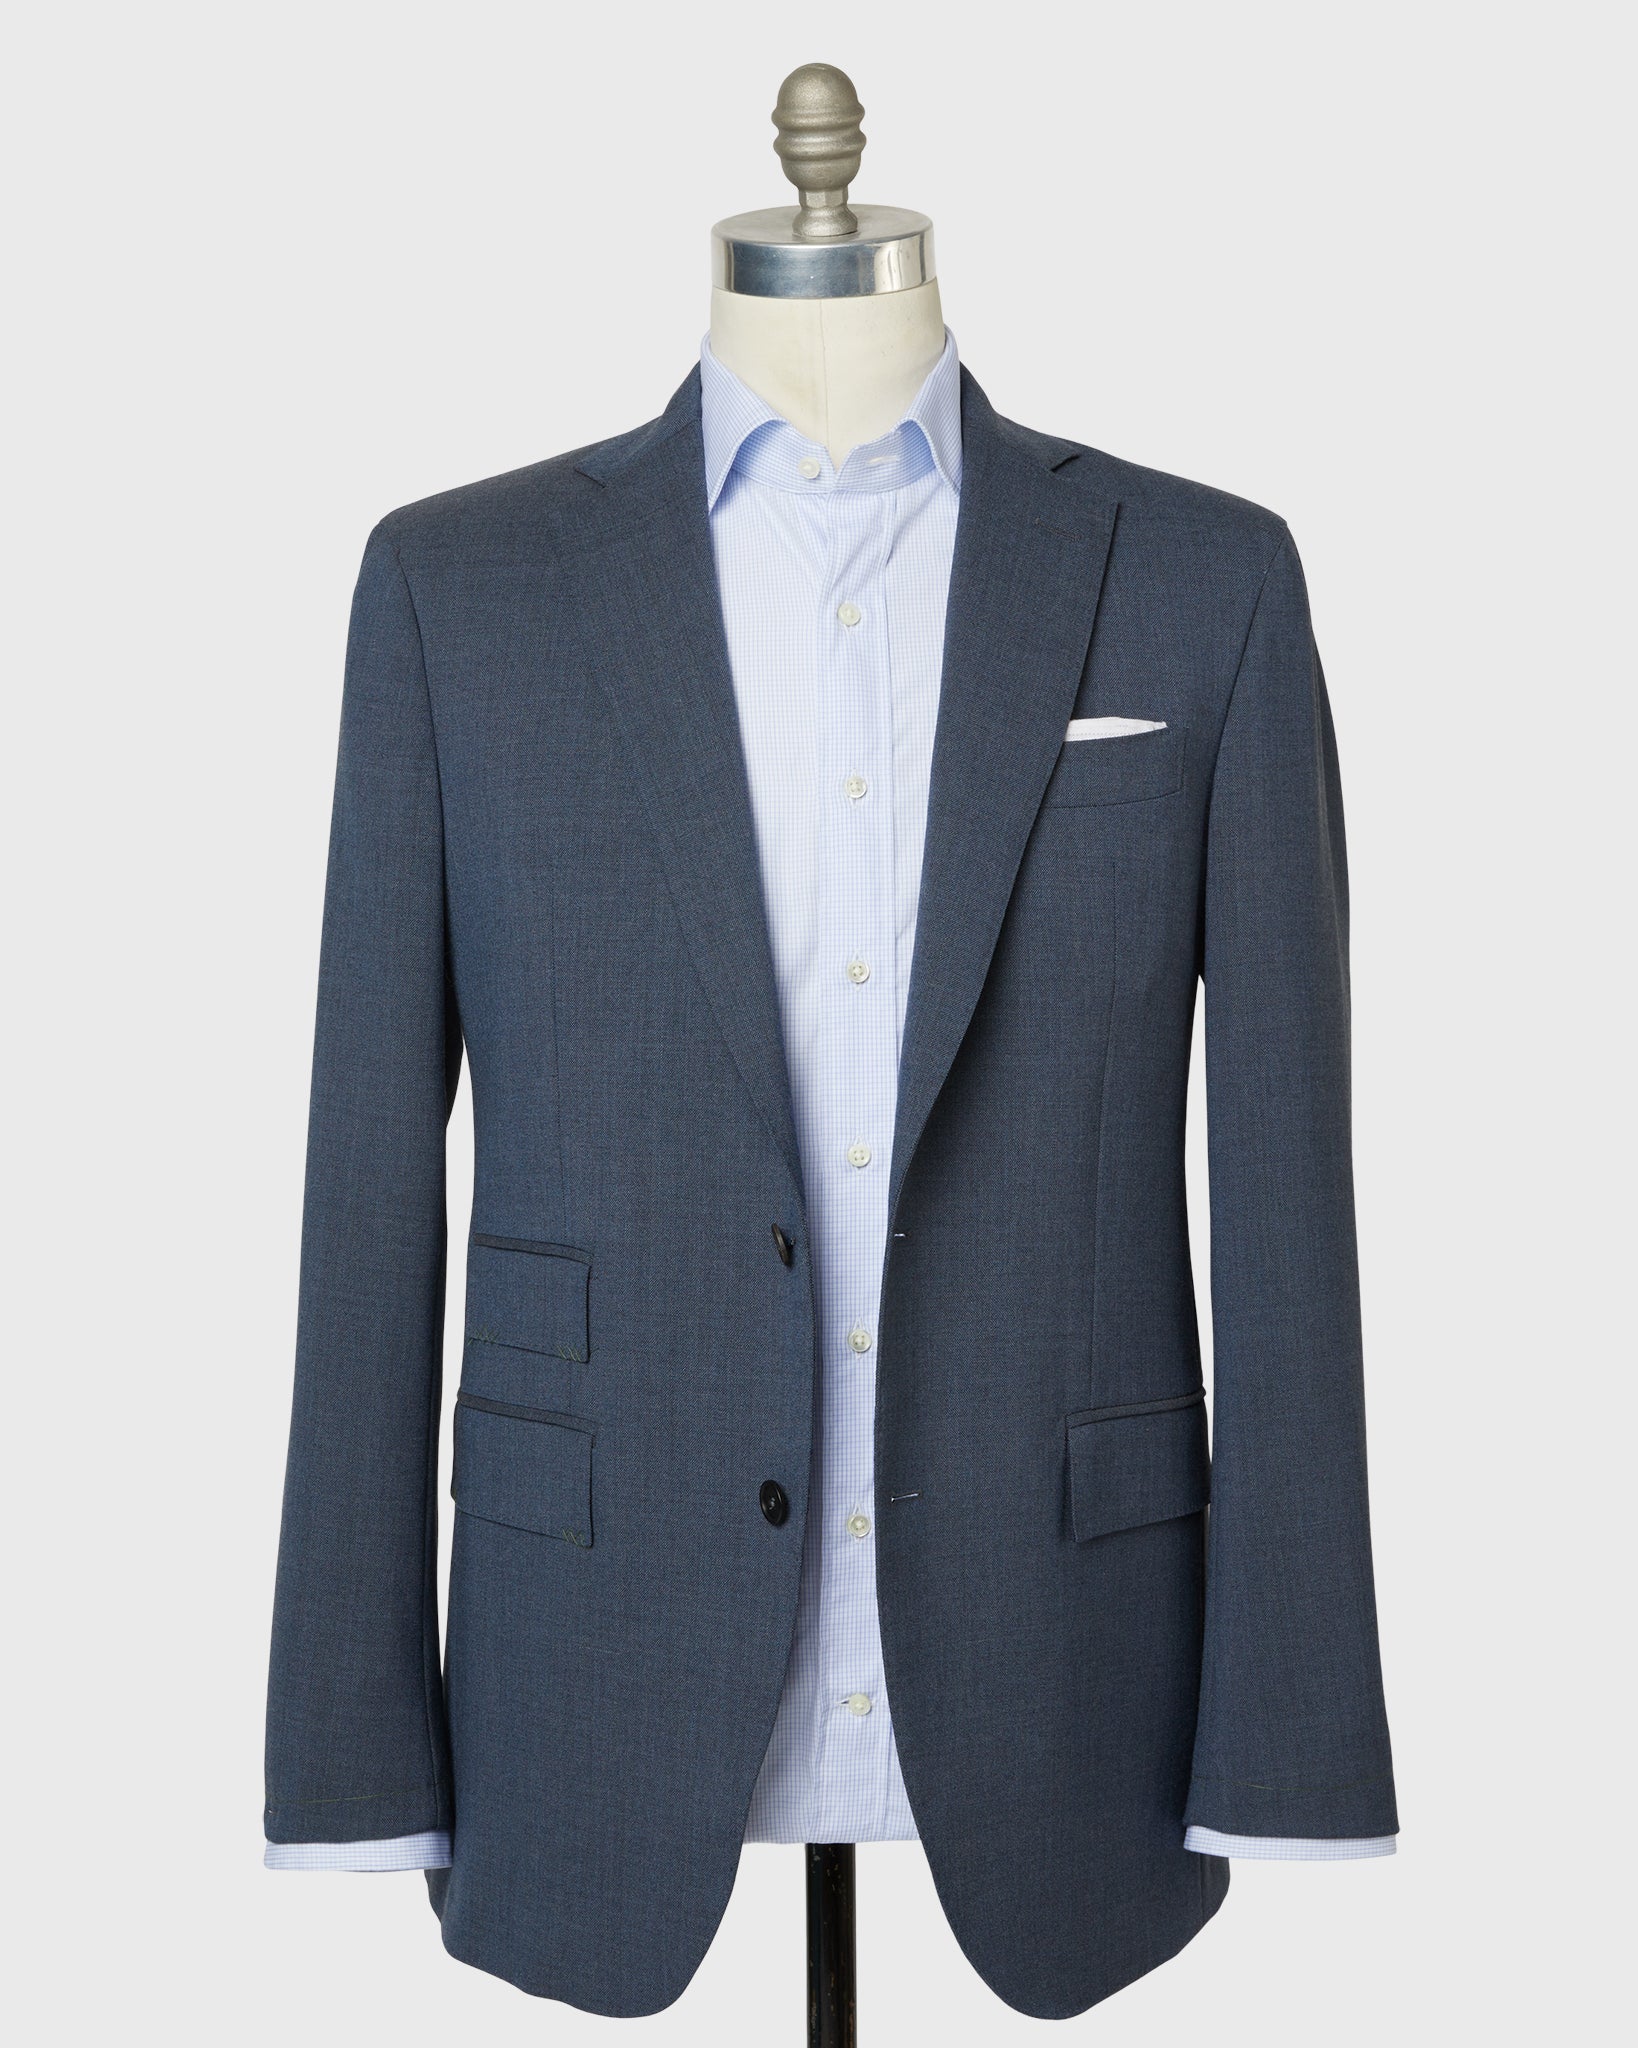 Kincaid No. 2 Suit in Postal Plainweave